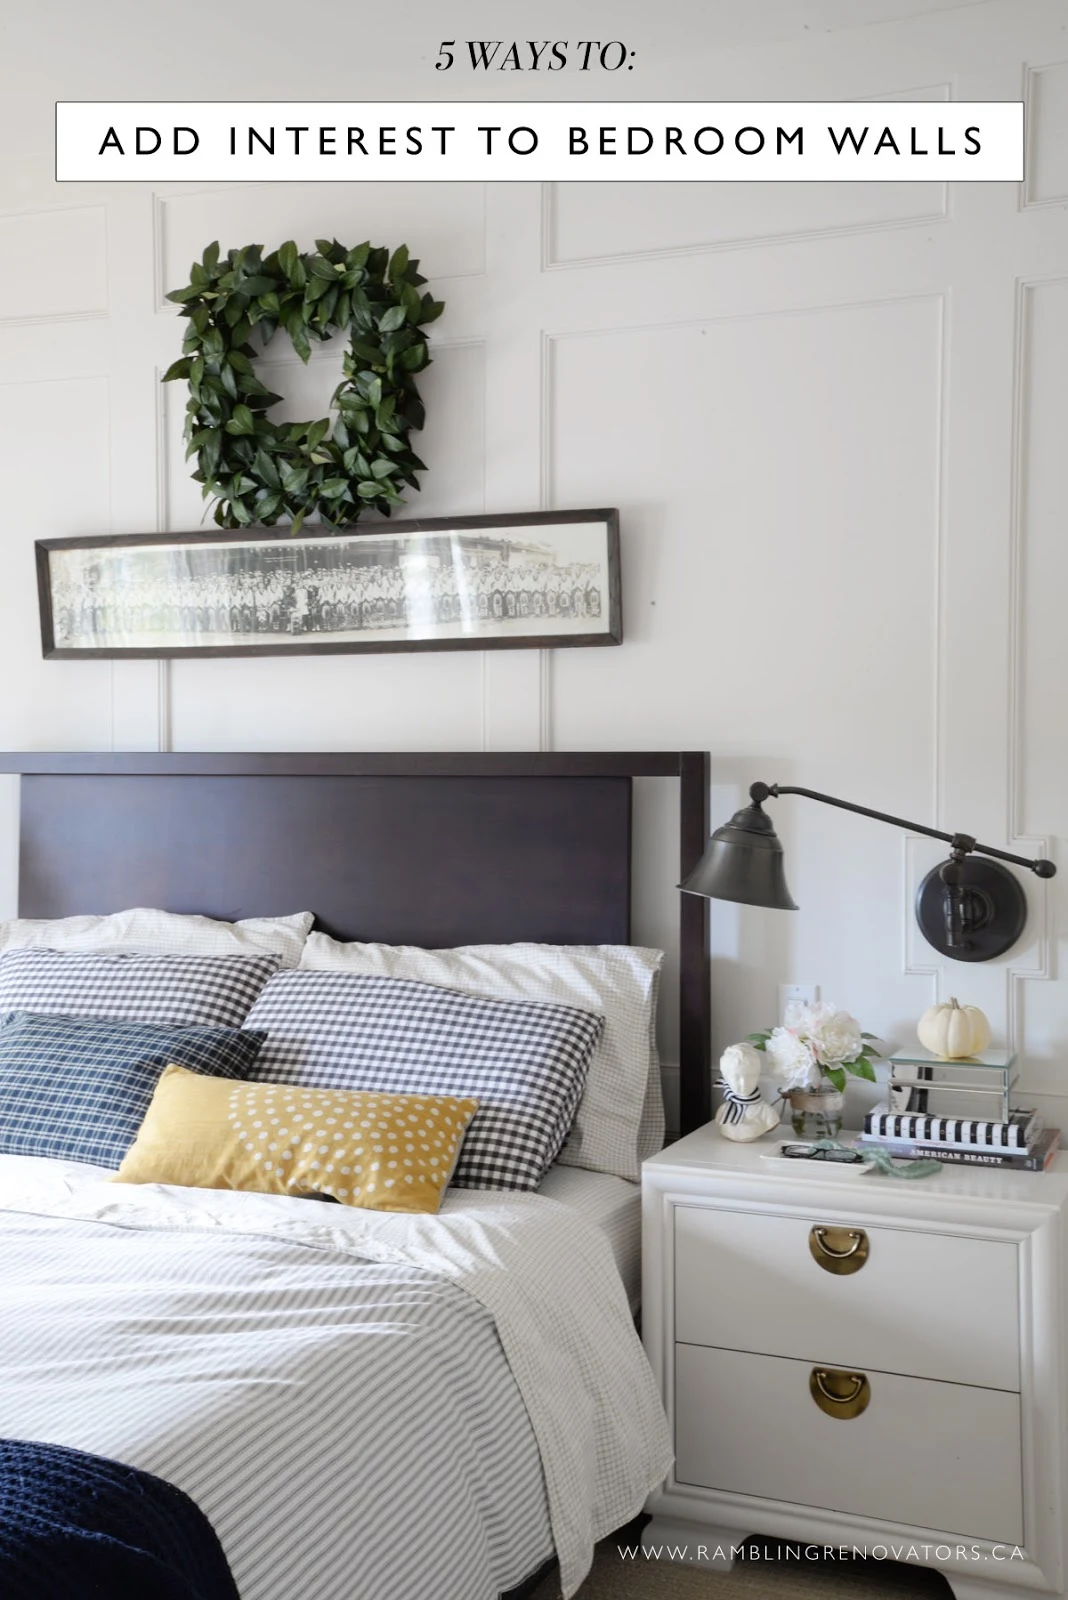 5 ways to add interest to bedroom walls | Ramblingrenovators.ca | wall treatment, bedroom decor ideas